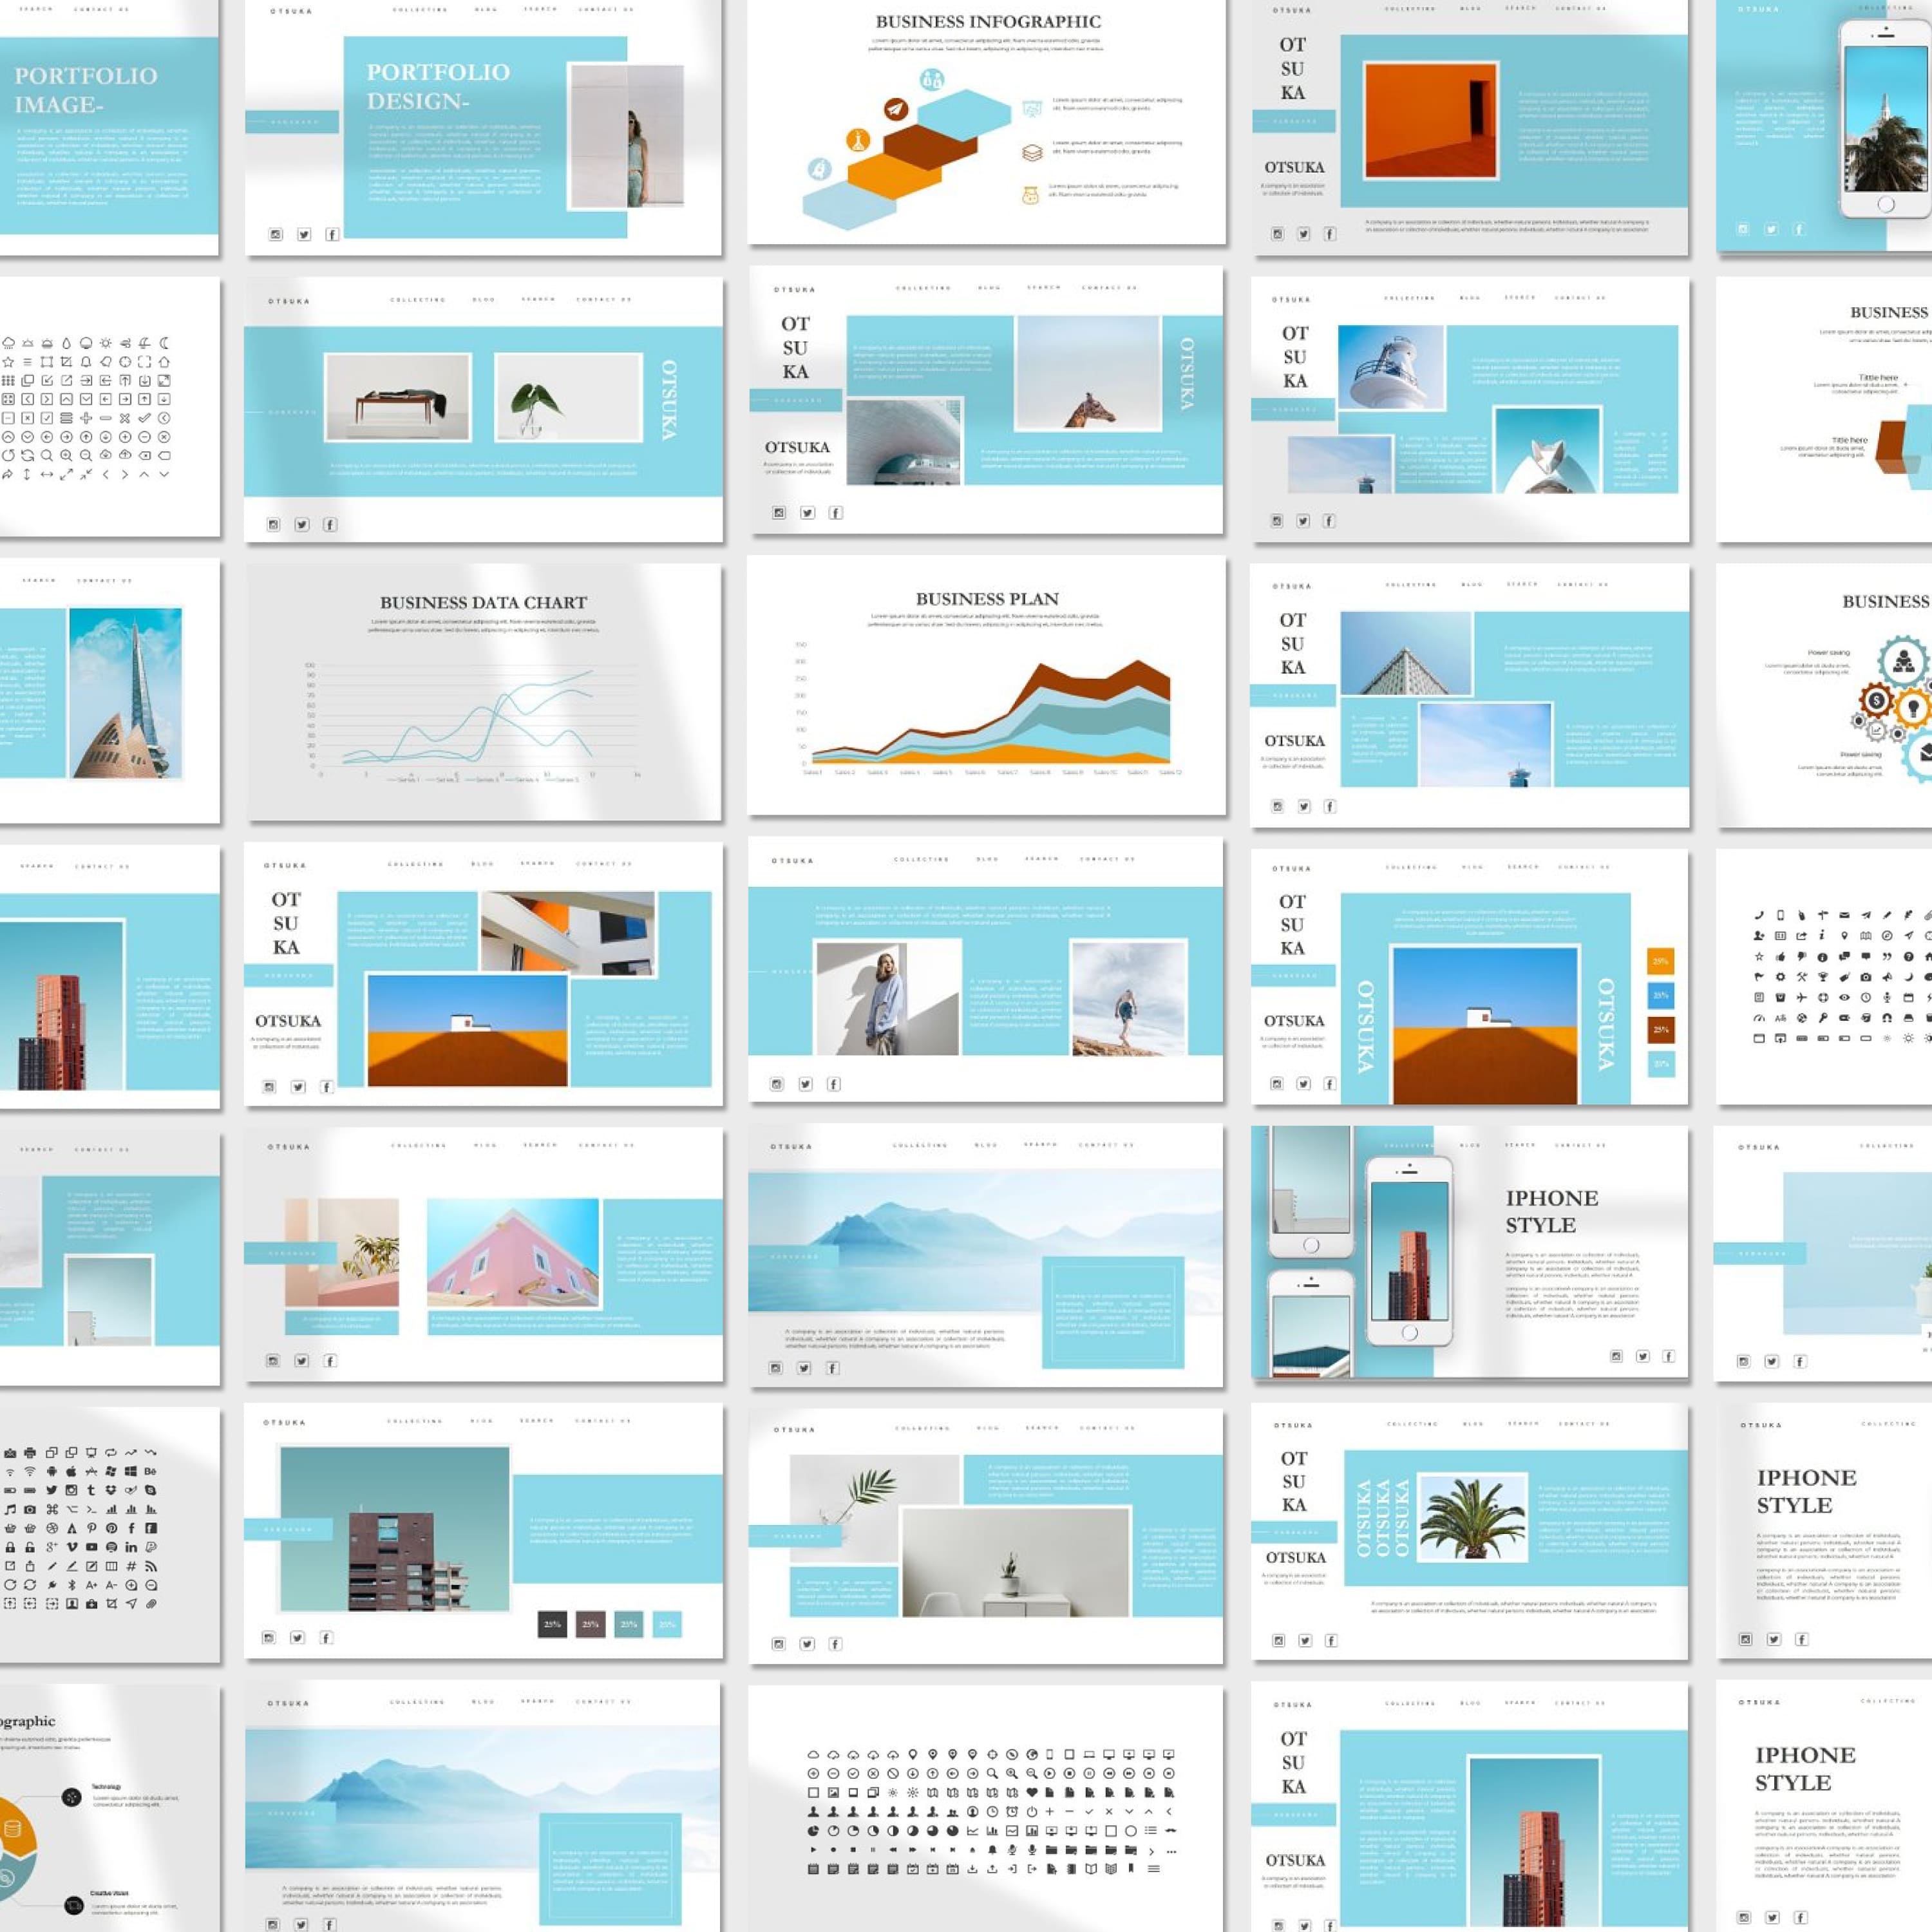 OTSUKA | Google Slide Template created by Barland Design.